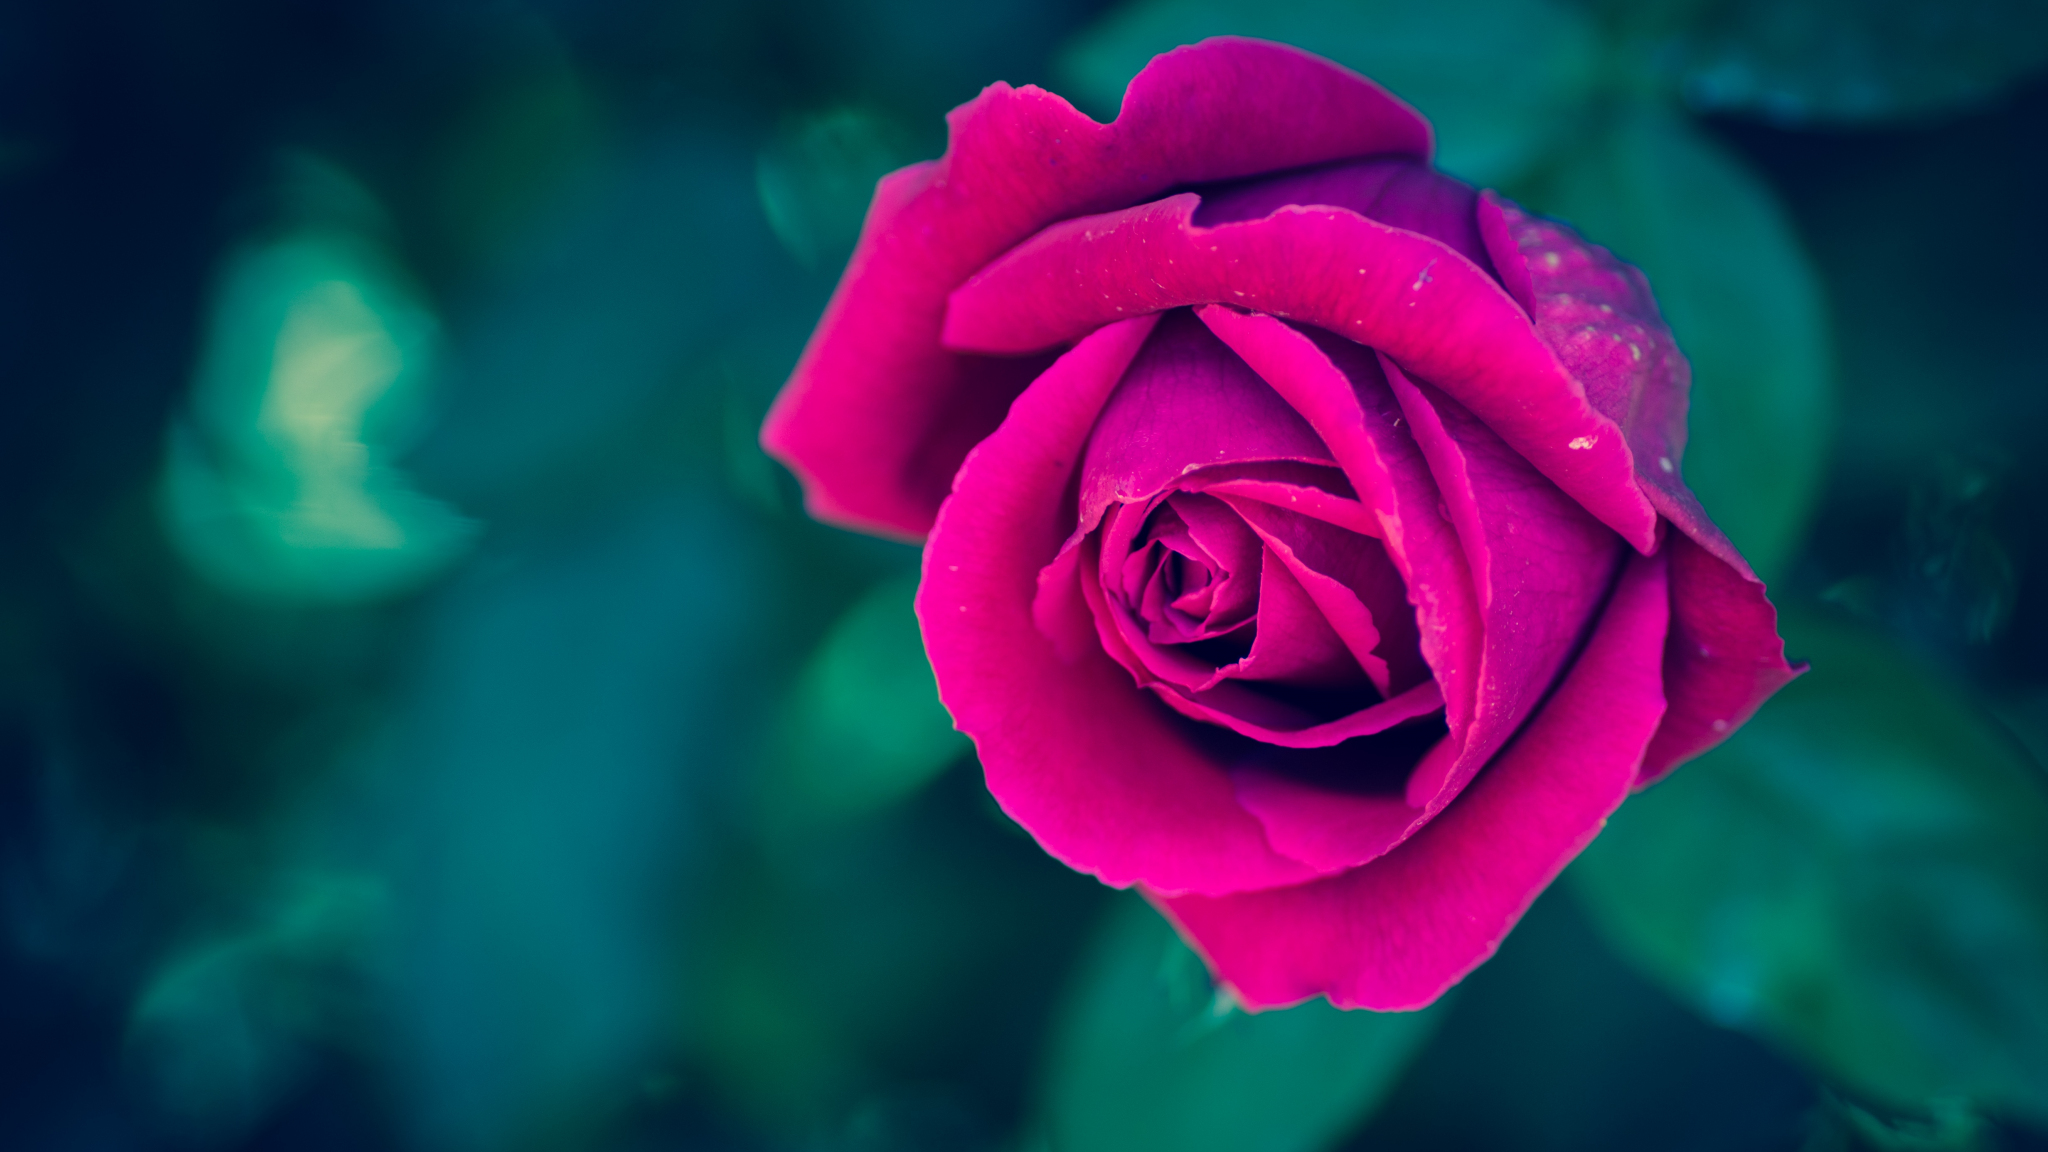 Download 2048x1152 Wallpaper Beautiful Pink Rose Flower, Blur, Close Up  Wallpaper, Dual Wide, Widescreen, 2048x1152 Hd Image, Background, 6977